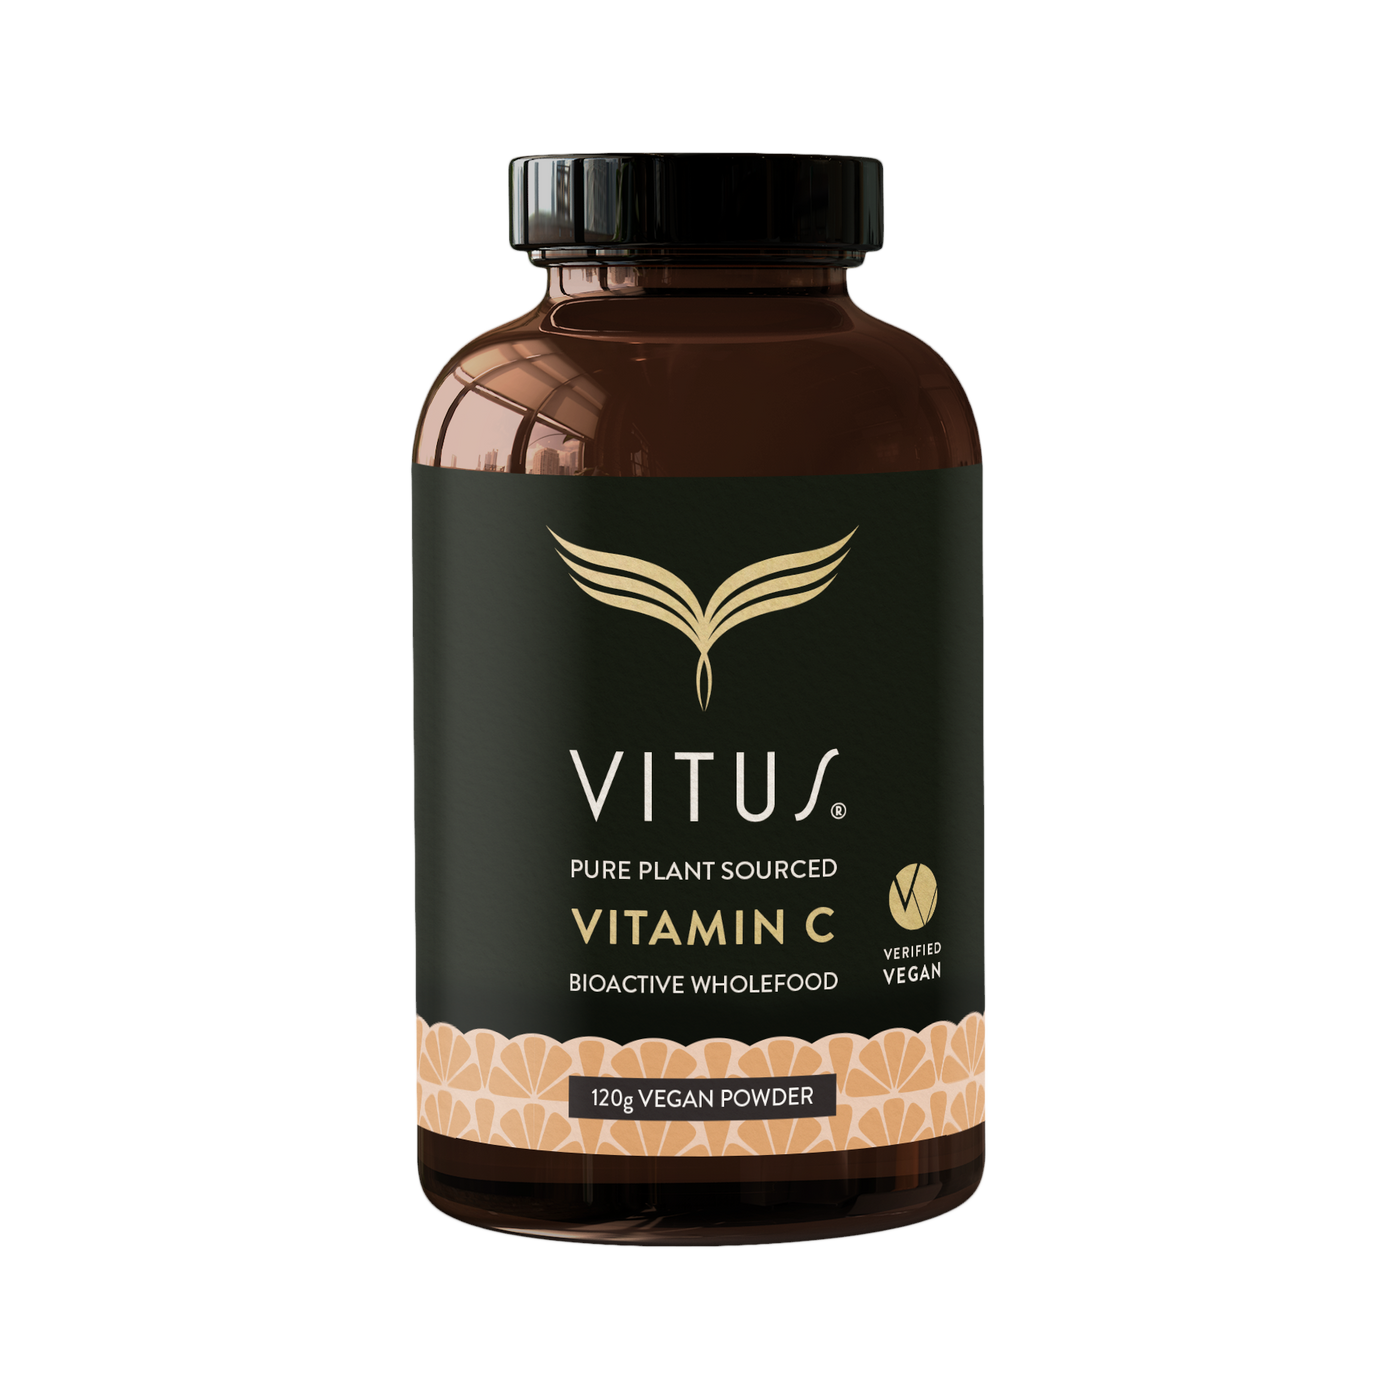 Vitus Vitamin C 120g powder